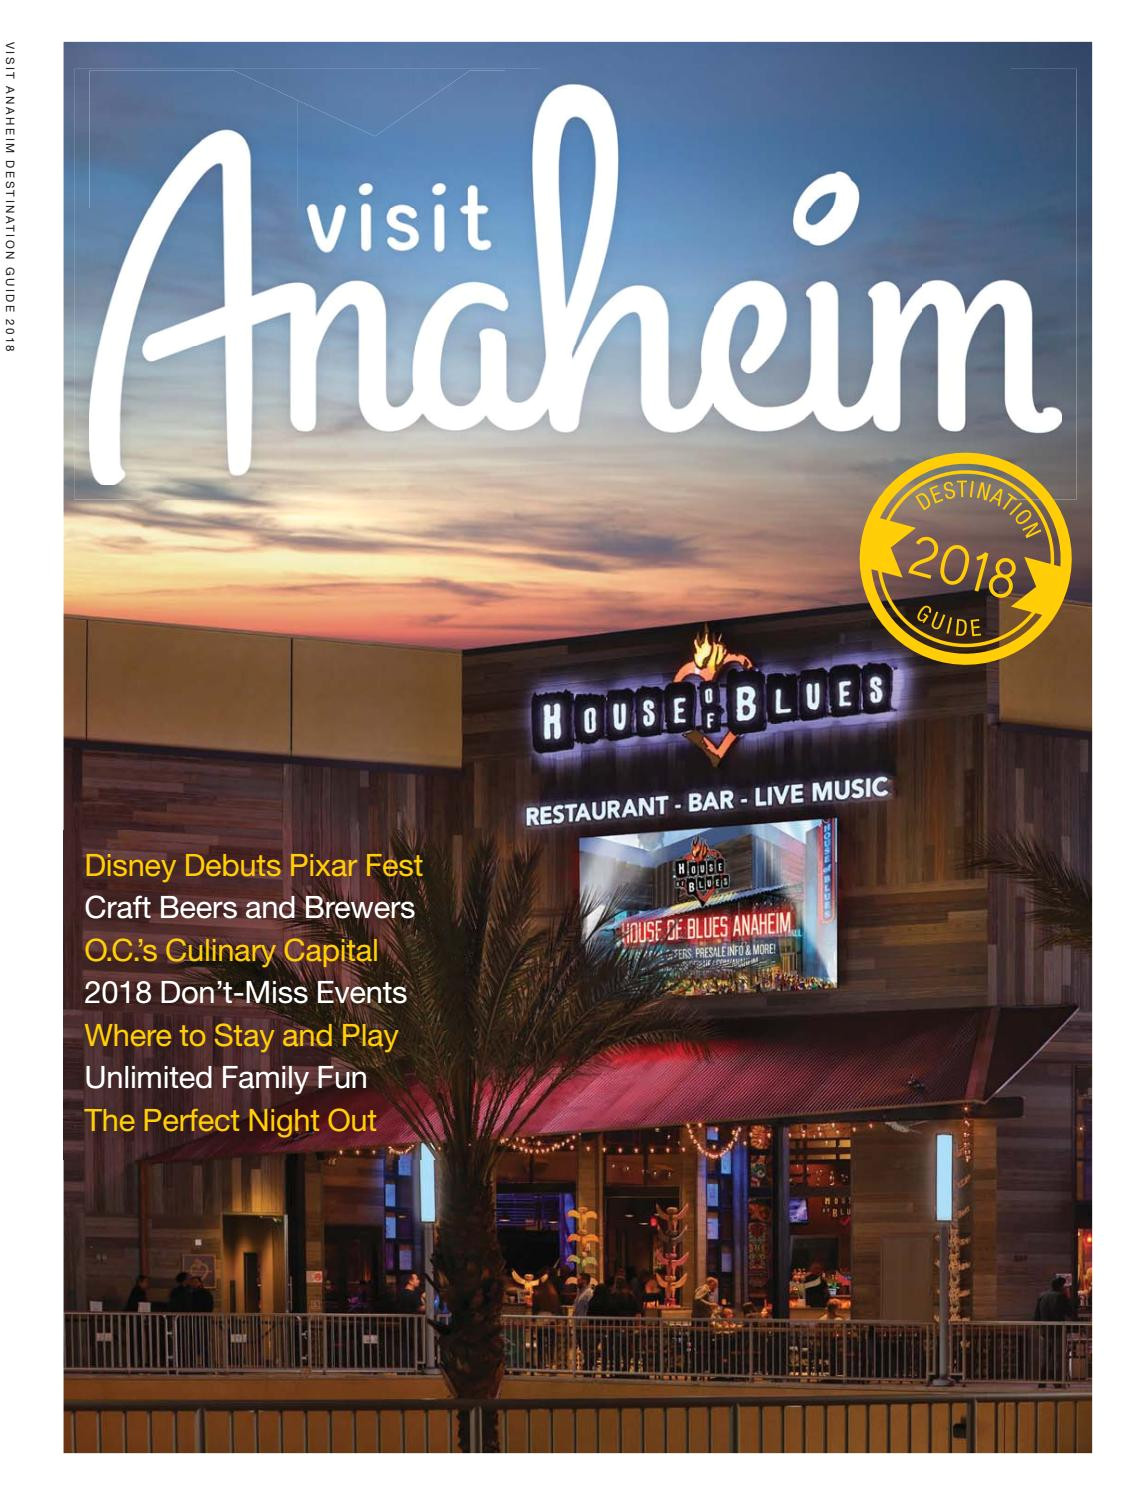 Costa Mesa Arts and Crafts Festival Visit Anaheim Destination Guide 2018 by orange Coast Magazine issuu